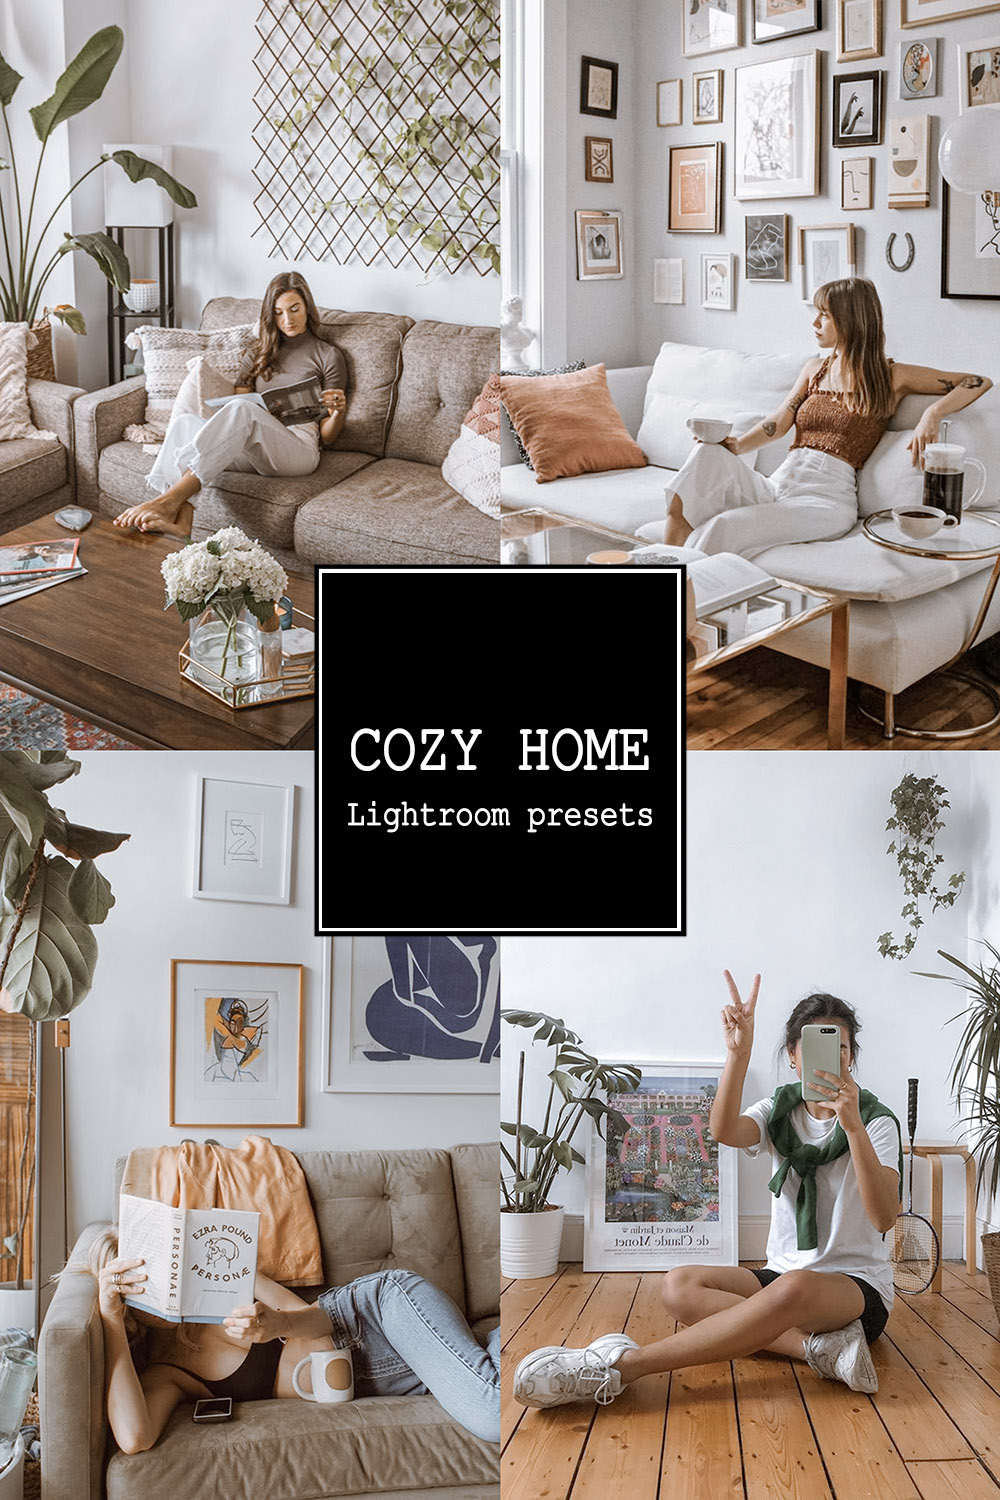 Cozy Home Presets pinterest image.